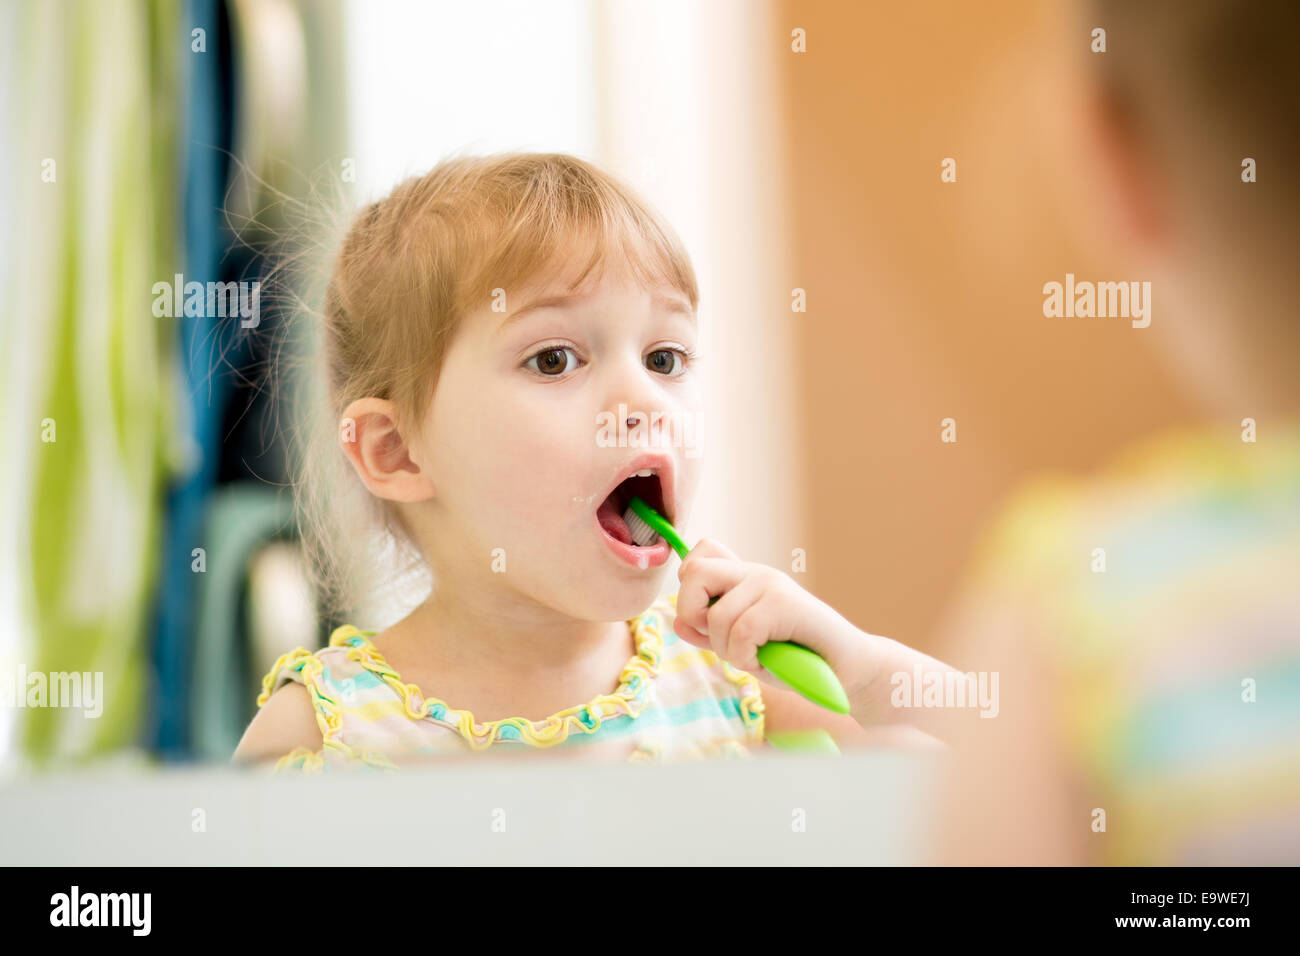 child girl brushing teeth Stock Photo